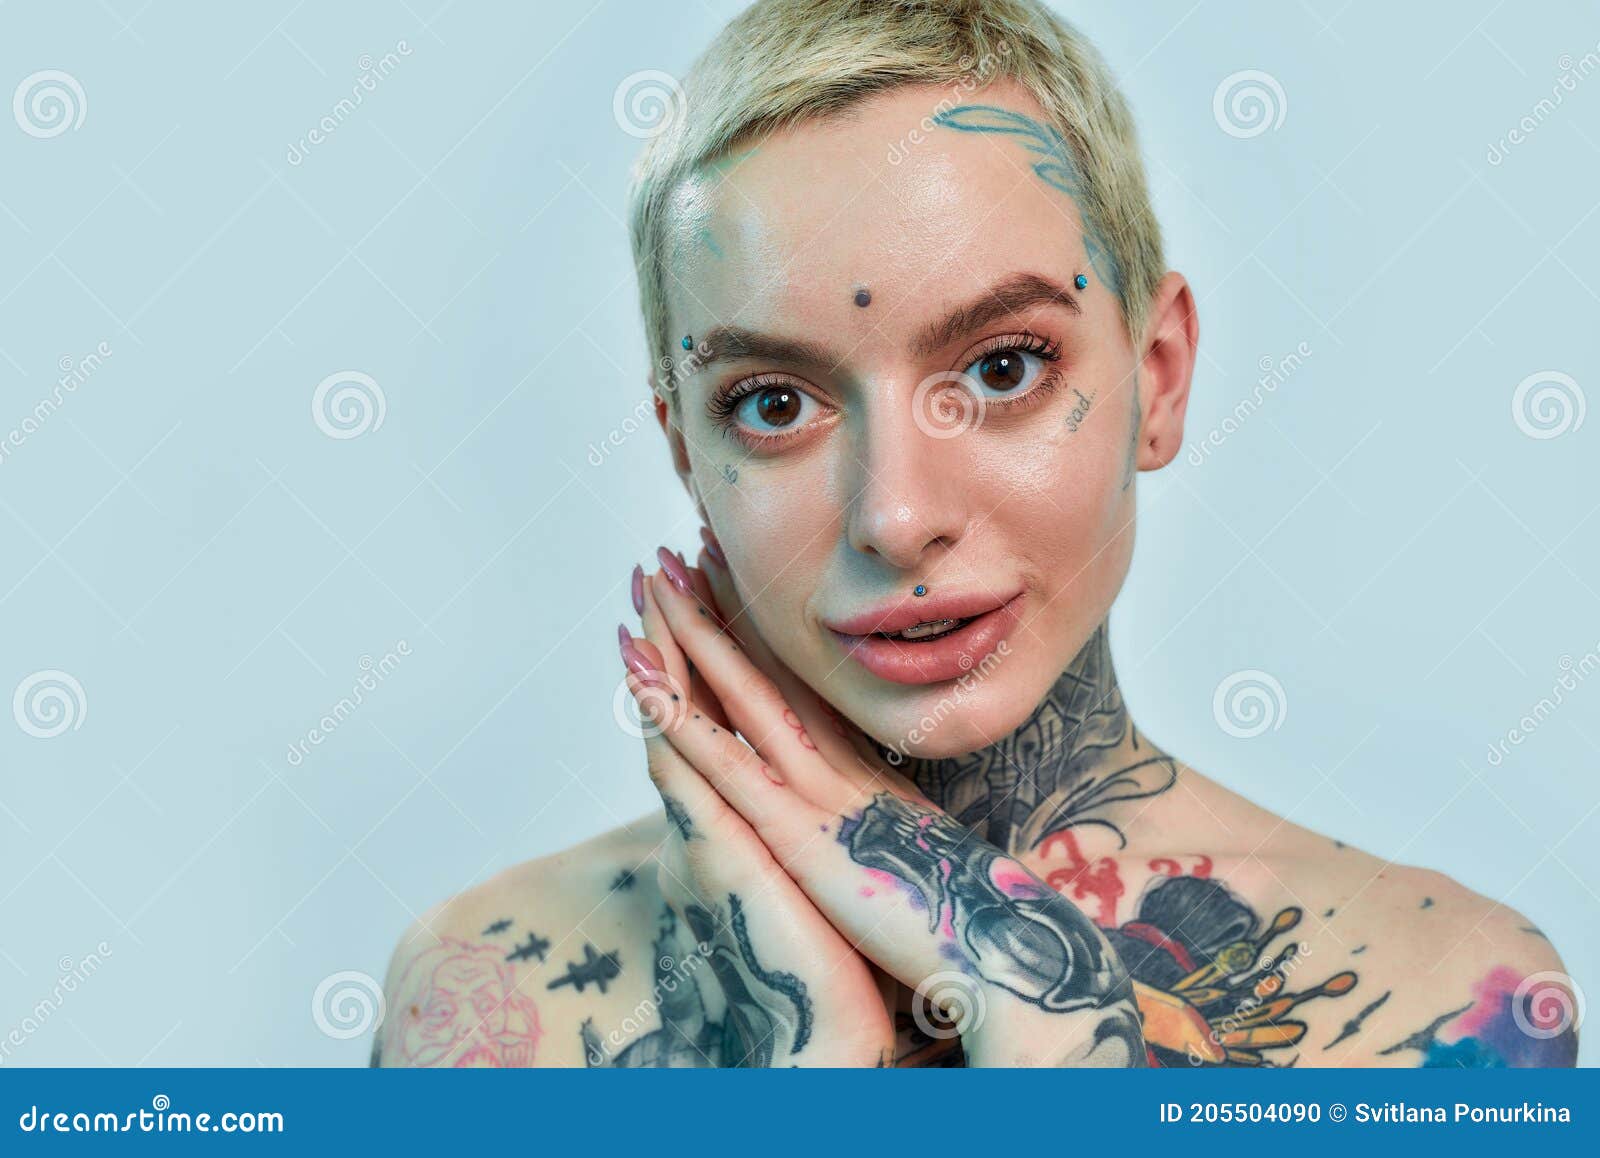 Pierced Tattooed Girl